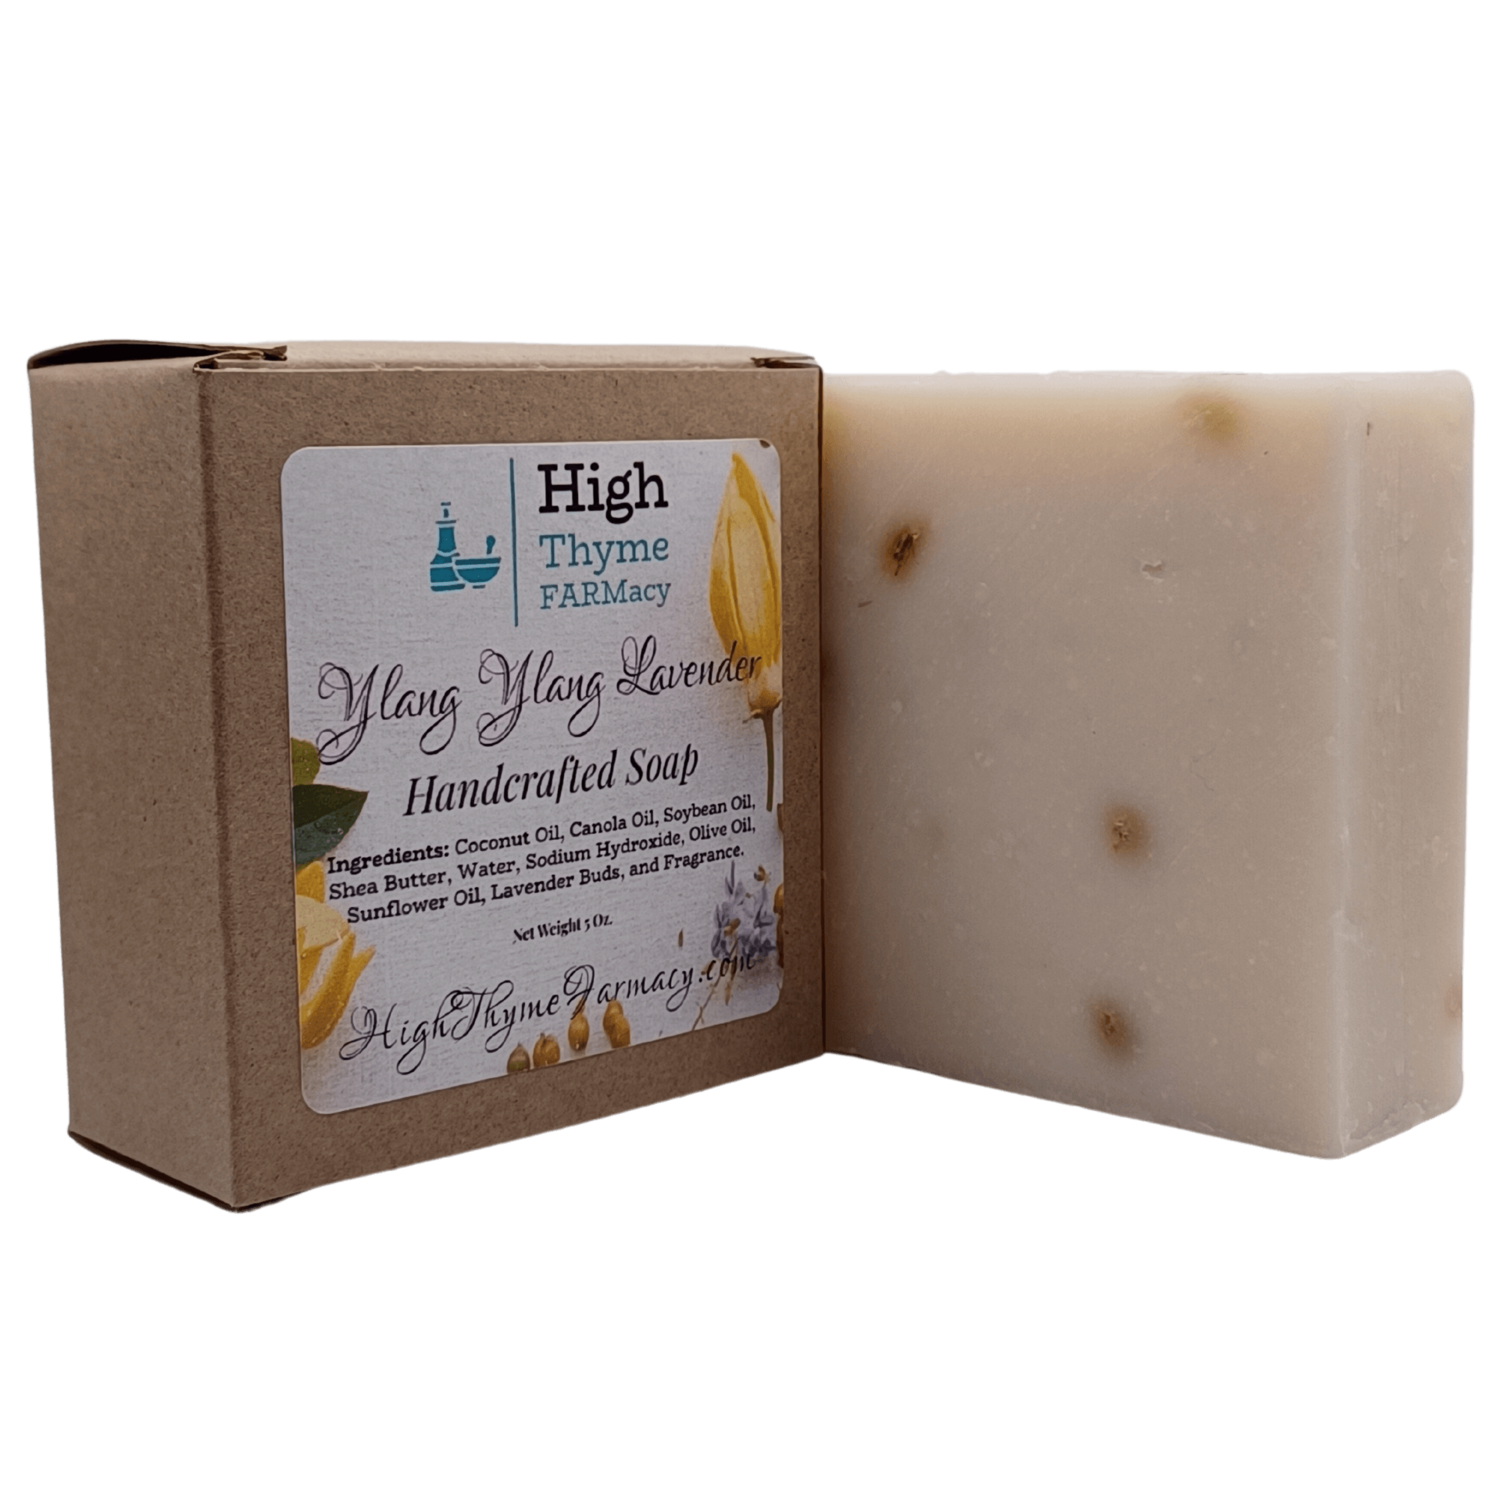 Ylang Ylang Lavender Soap - Handcrafted Vegan Lye Soap with lavender buds